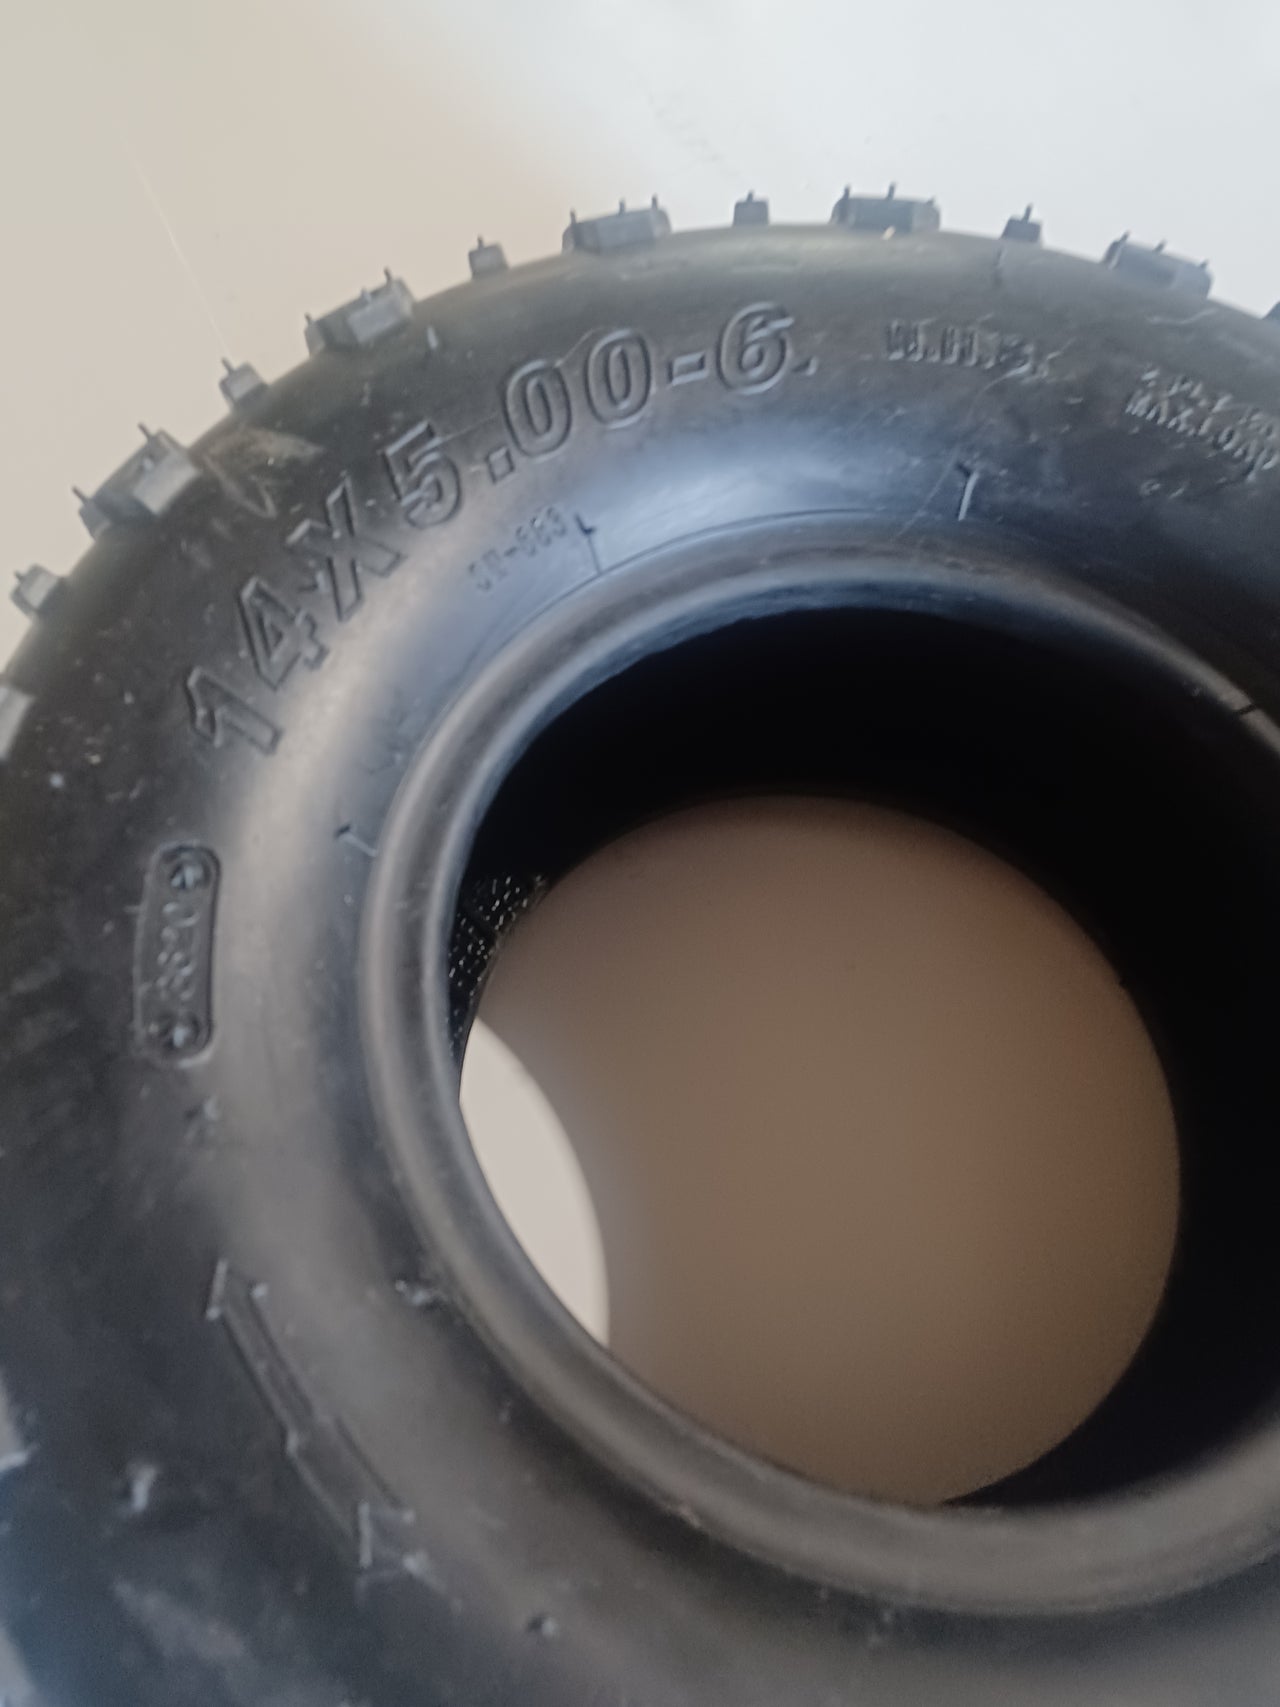 Replacement Tire | 14x4.10-6 | 14x5.00-6 | Venom 1300W ATV